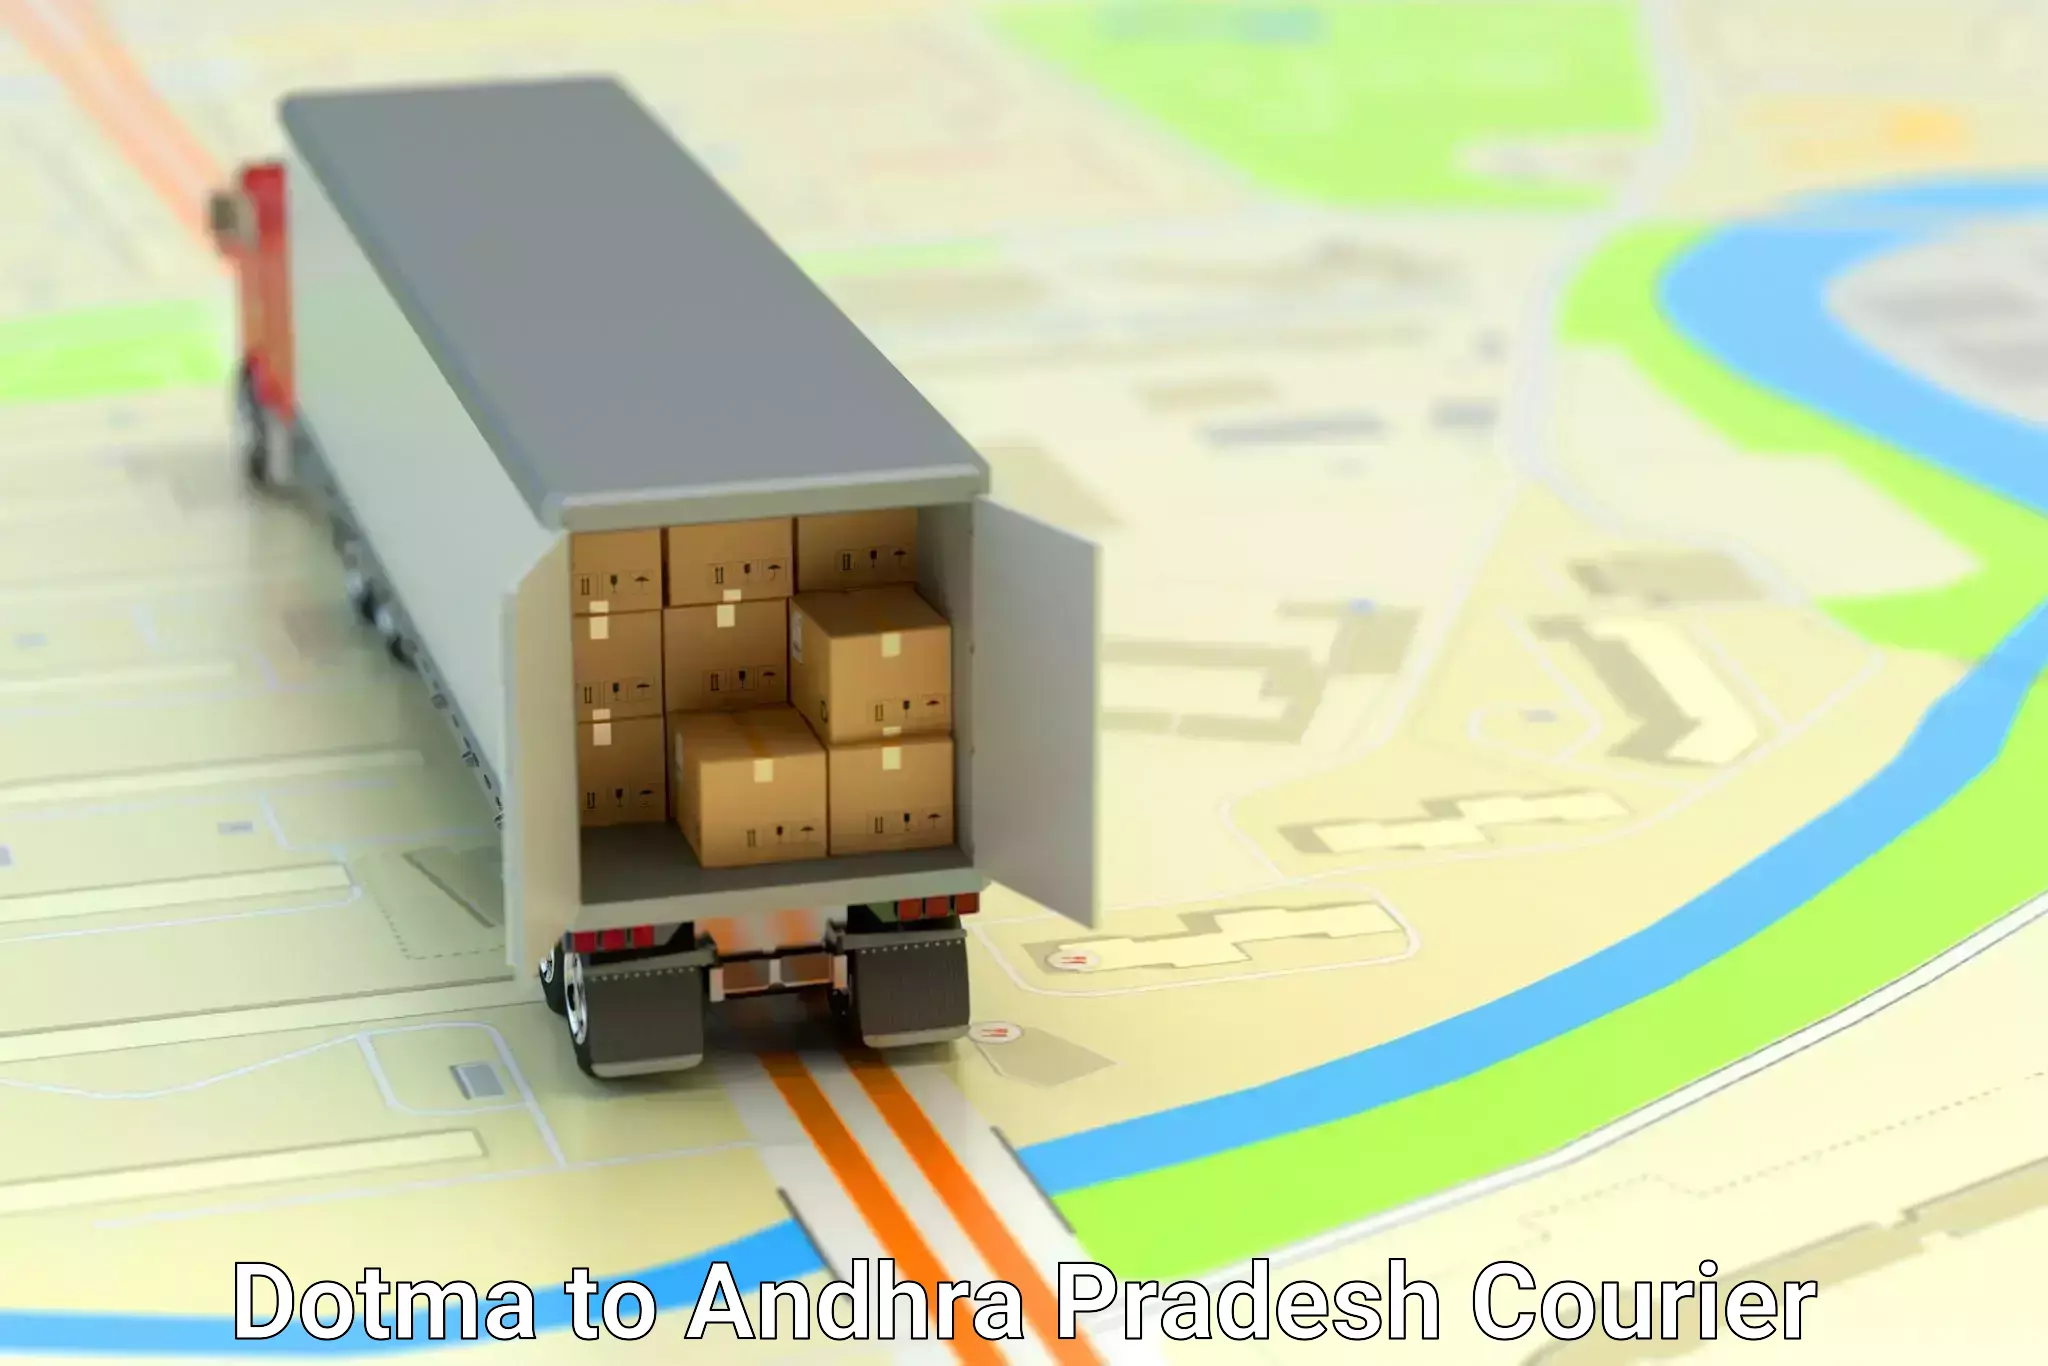 Supply chain efficiency Dotma to Andhra Pradesh